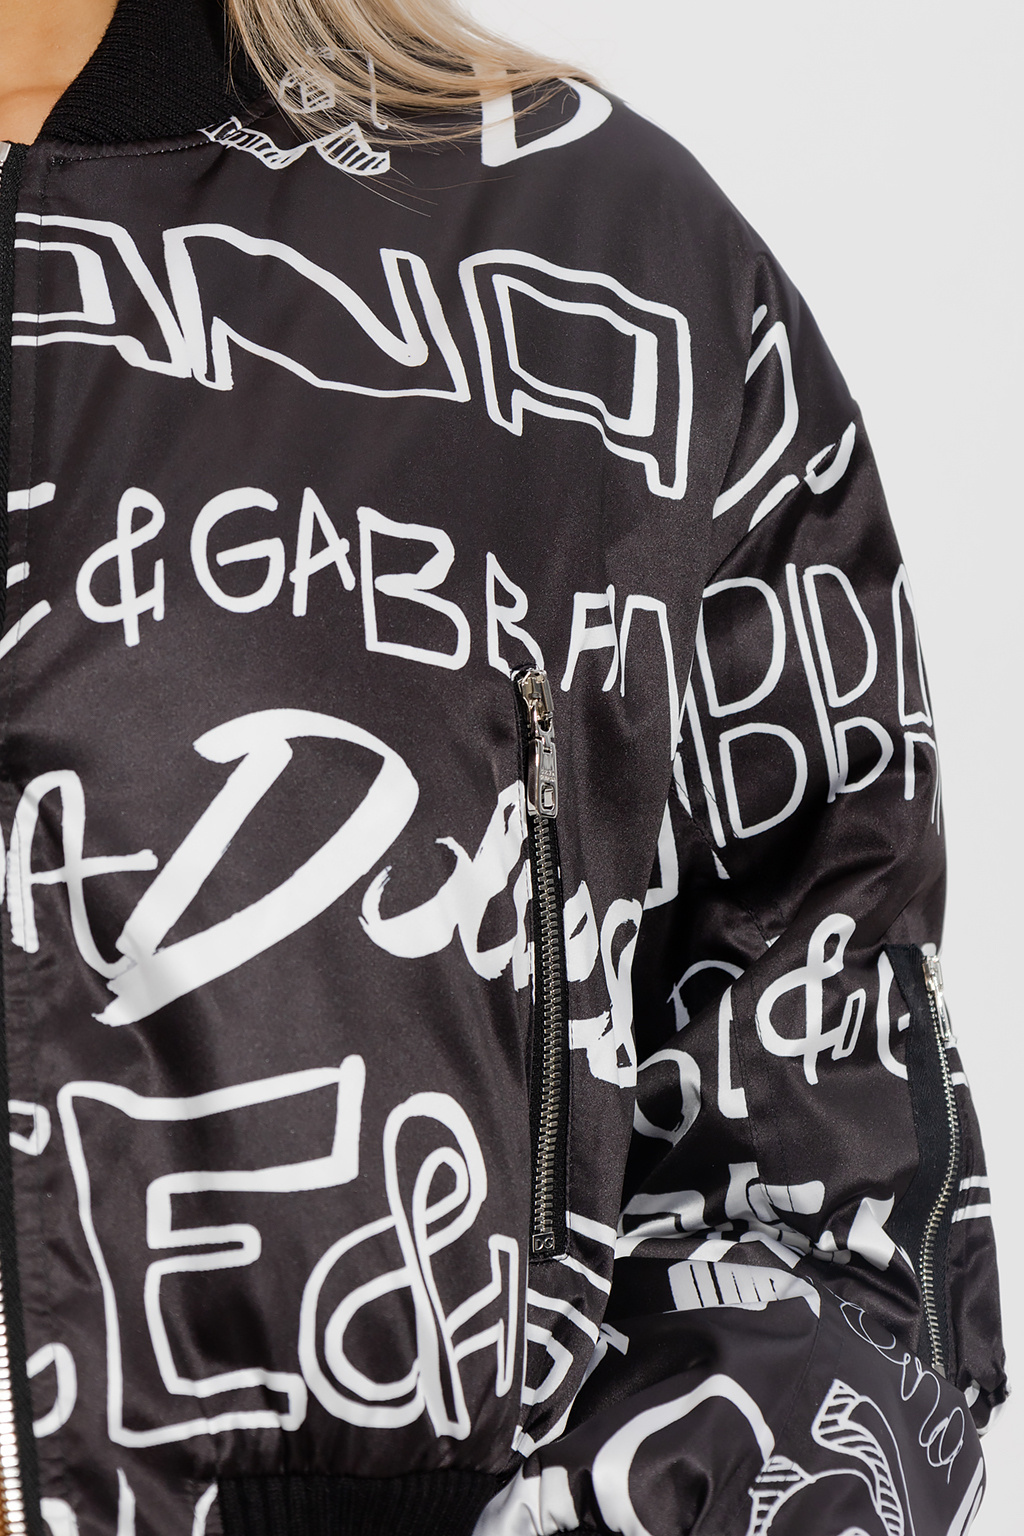 Dolce & Gabbana Lace-Up Shoes for Men Bomber jacket